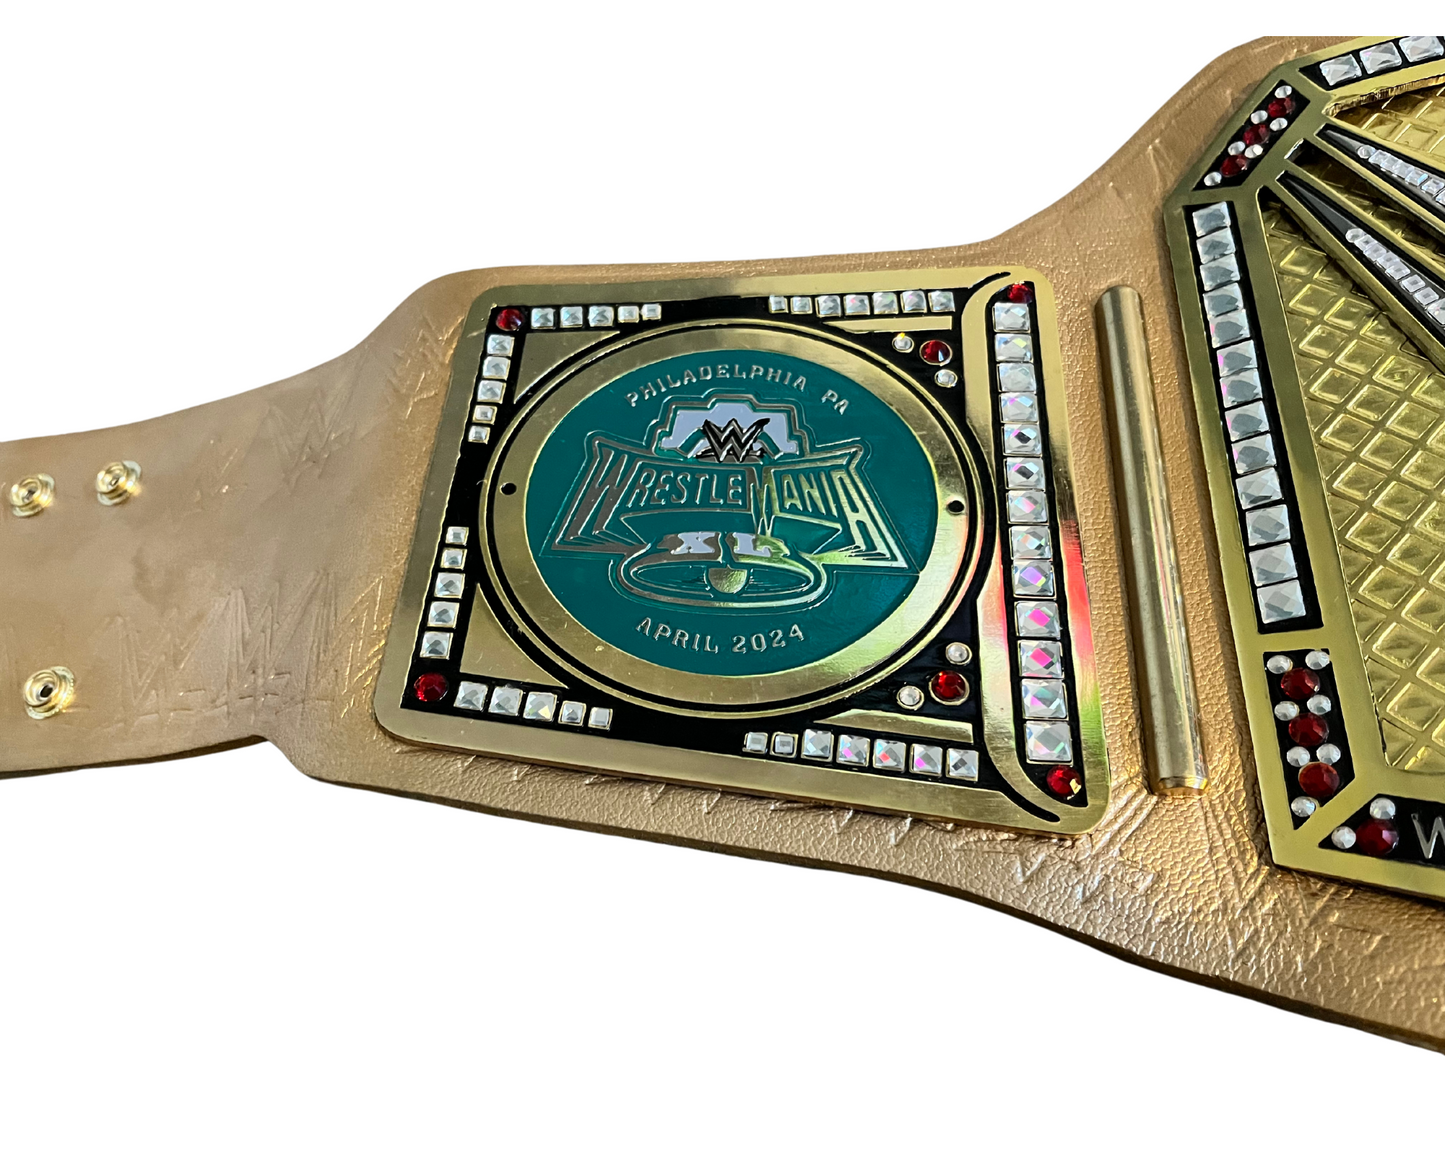 Custom Replica Unofficial WrestleMania Golden Champion Belt